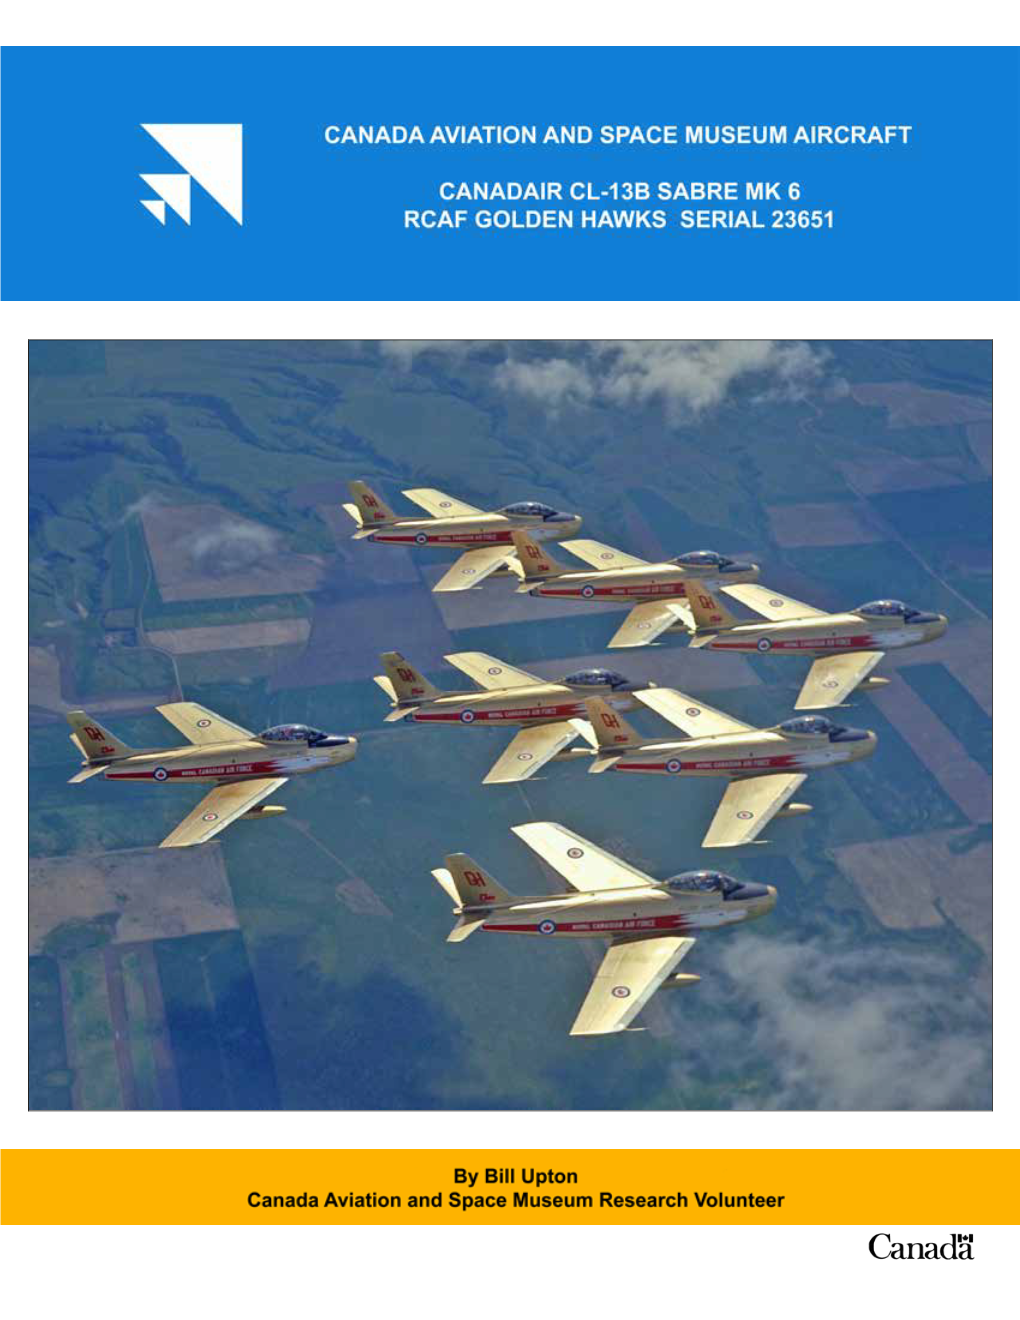 CASM-Canadair-CL-13B-Sabre-F-86